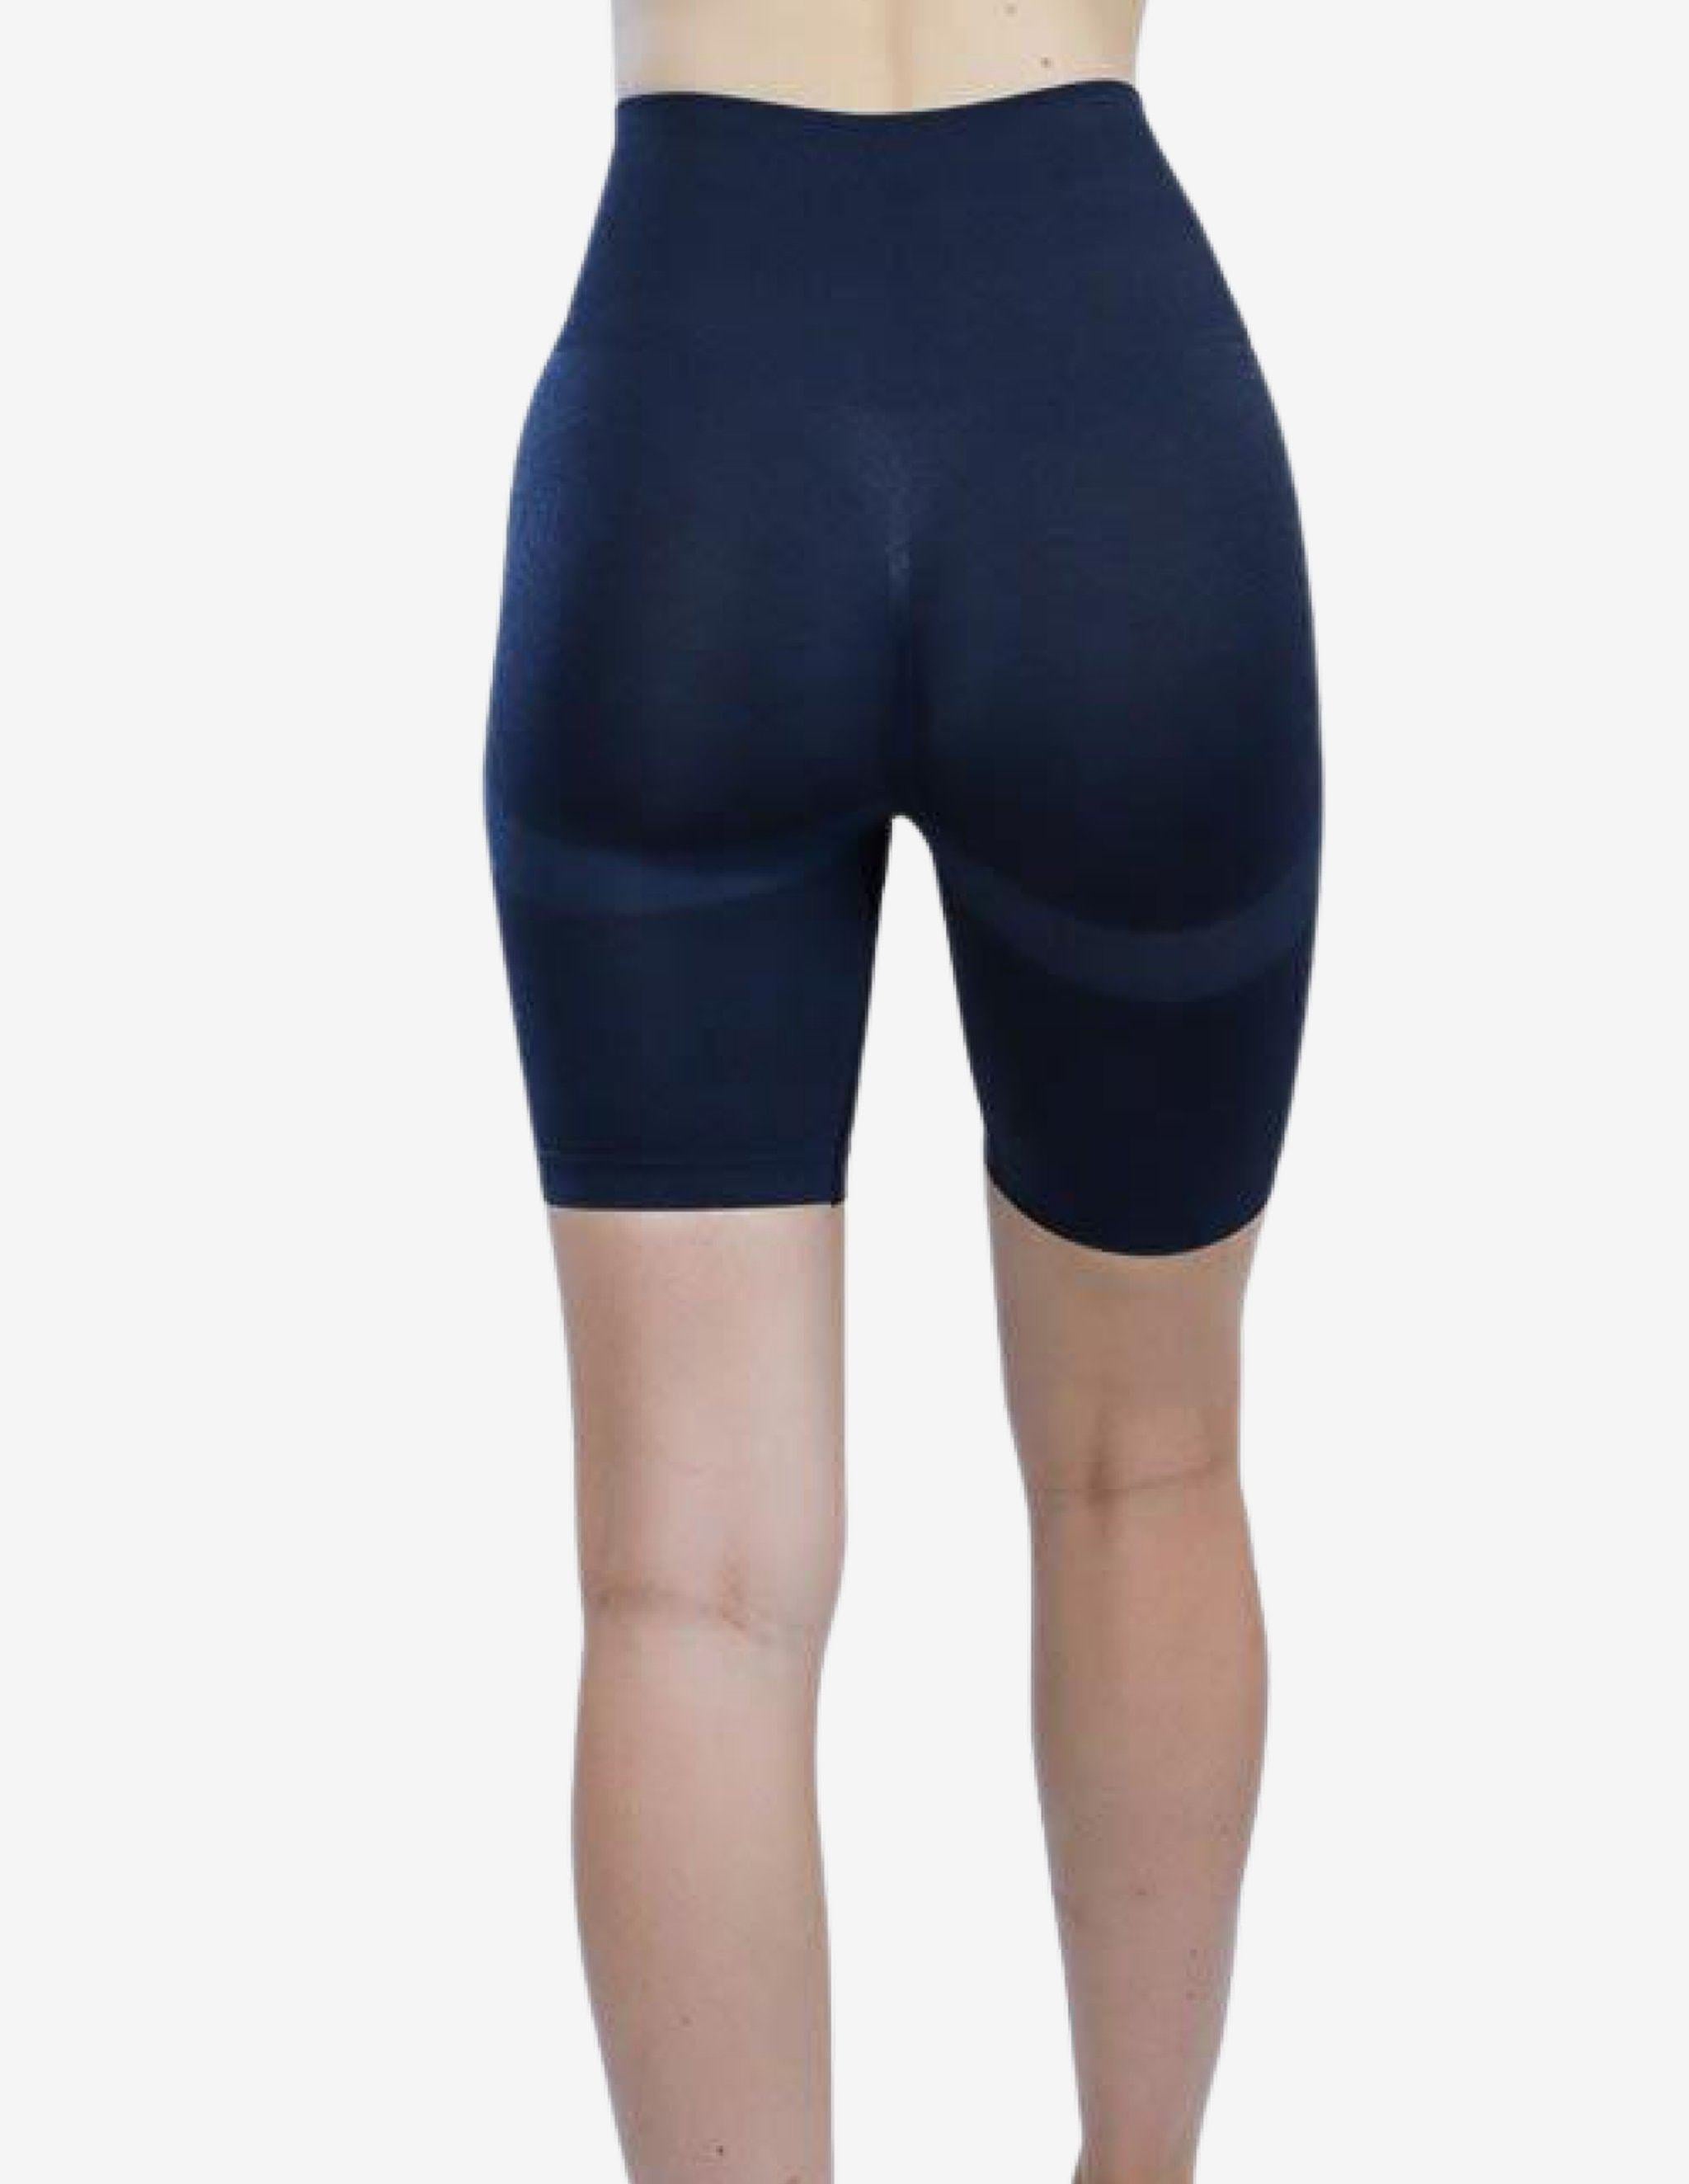 TASGAL Women's Activewear - Arise Scrunch Shorts Blue - Guru Muscle